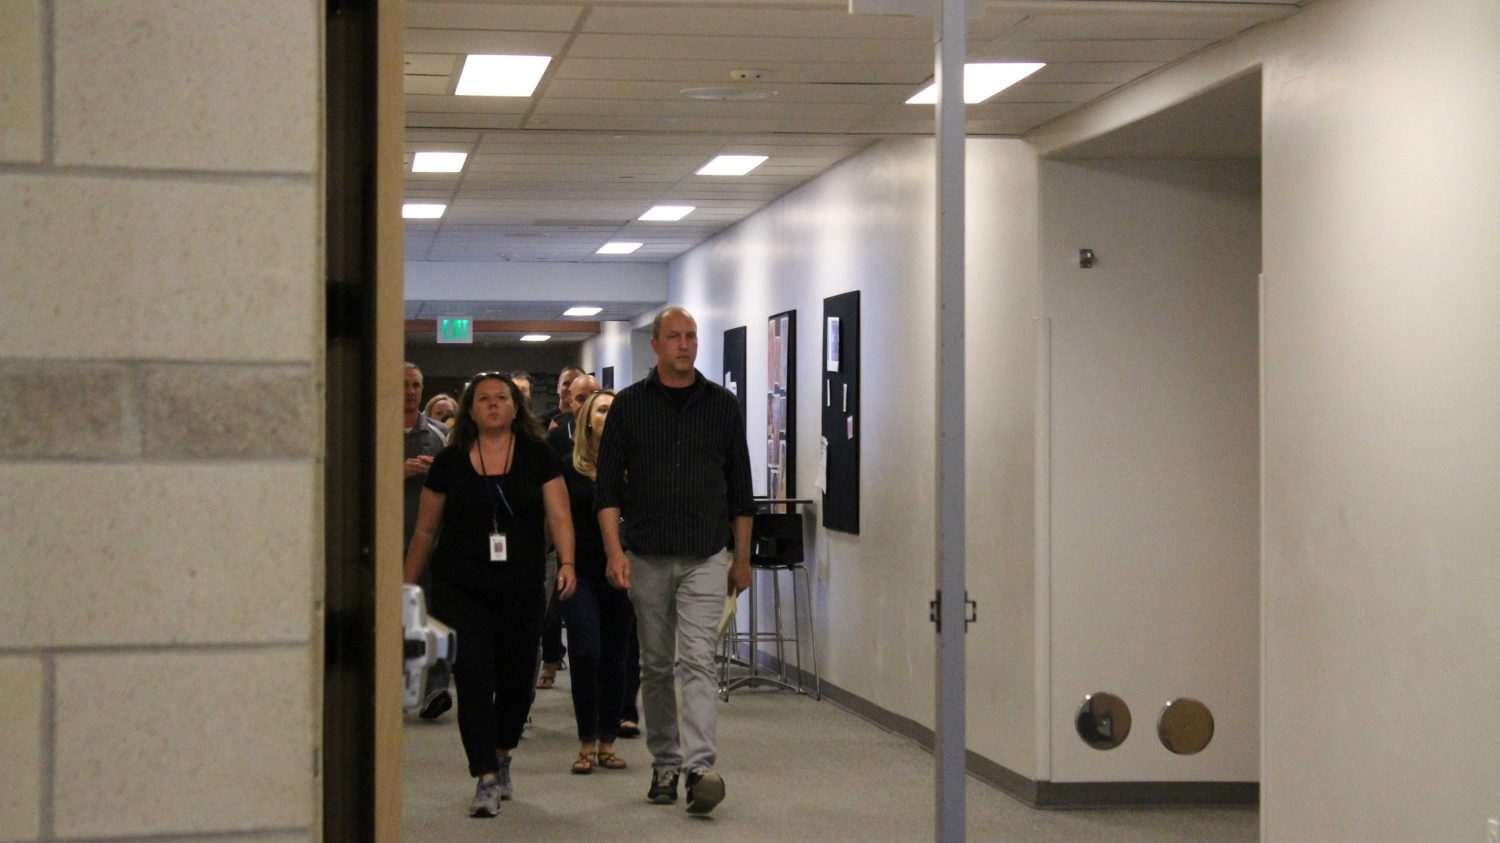 Teachers walk through the halls of FRHS in silence.
Photo Credit: Serena Bettis